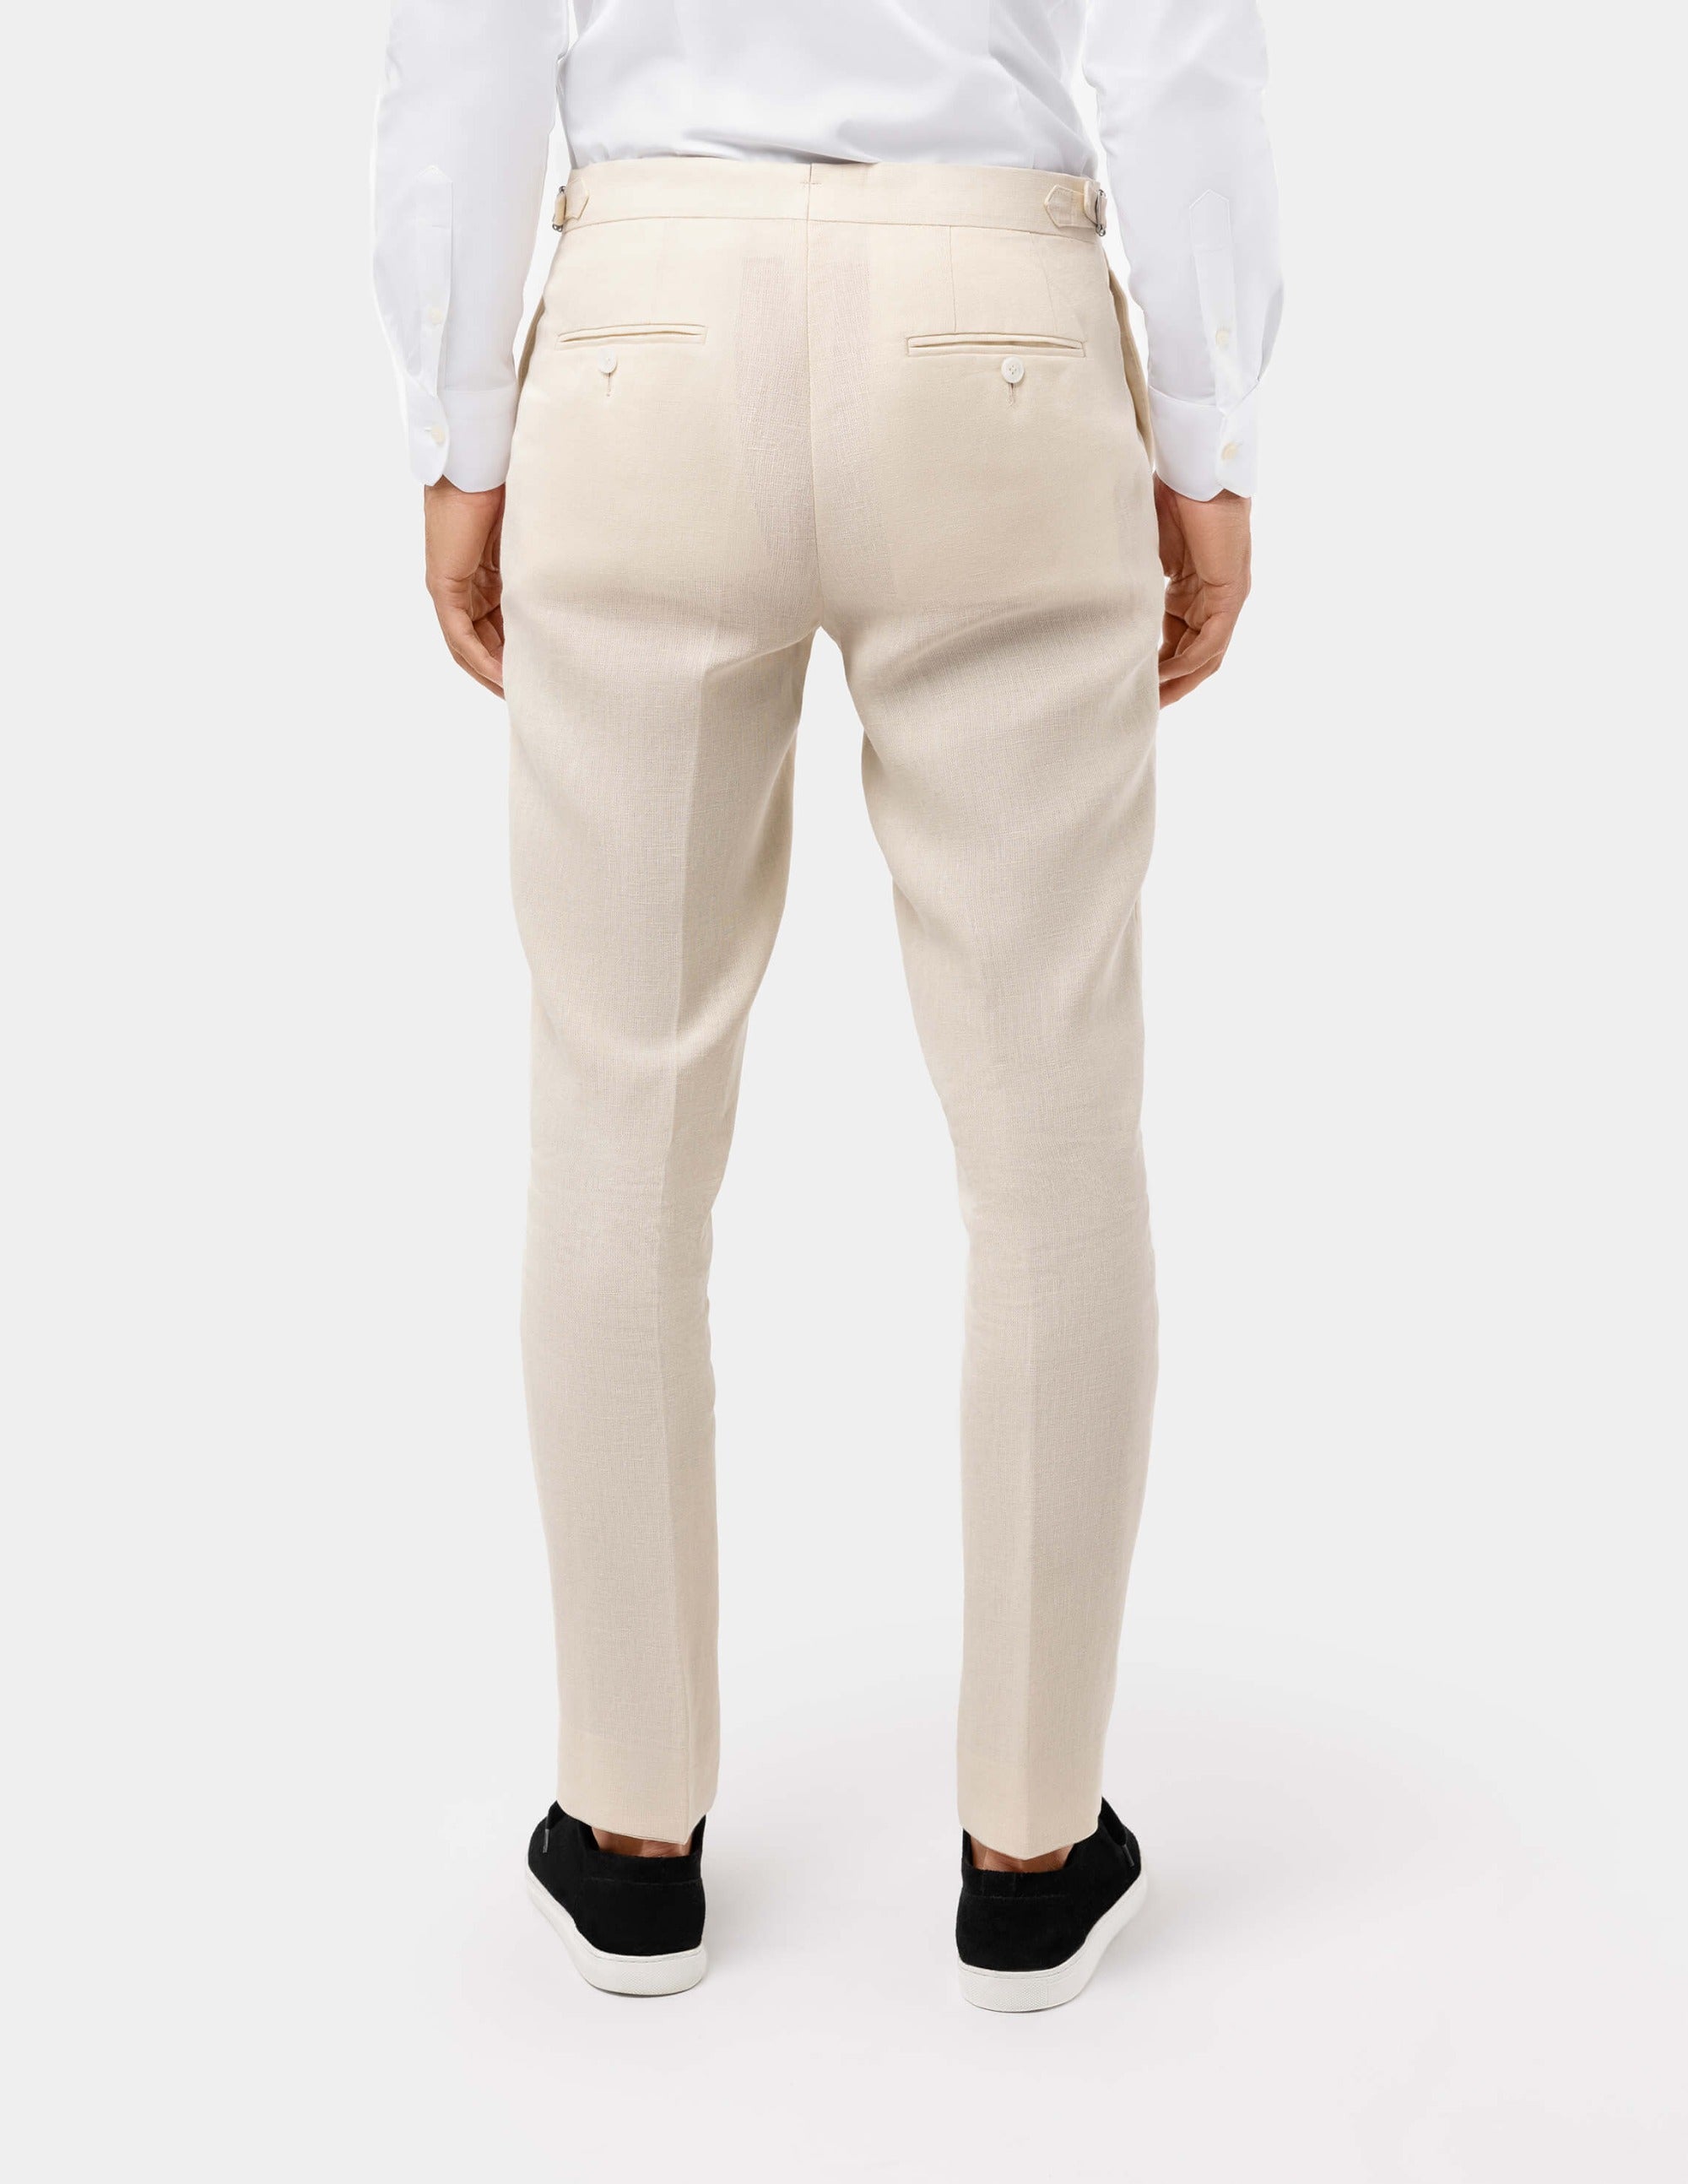 HANBANGWEI Beige Mens Linen Dress Pants for Wedding Slim Fit Linen Suits  for Men Linen Pants Men Big and Tall at Amazon Men's Clothing store